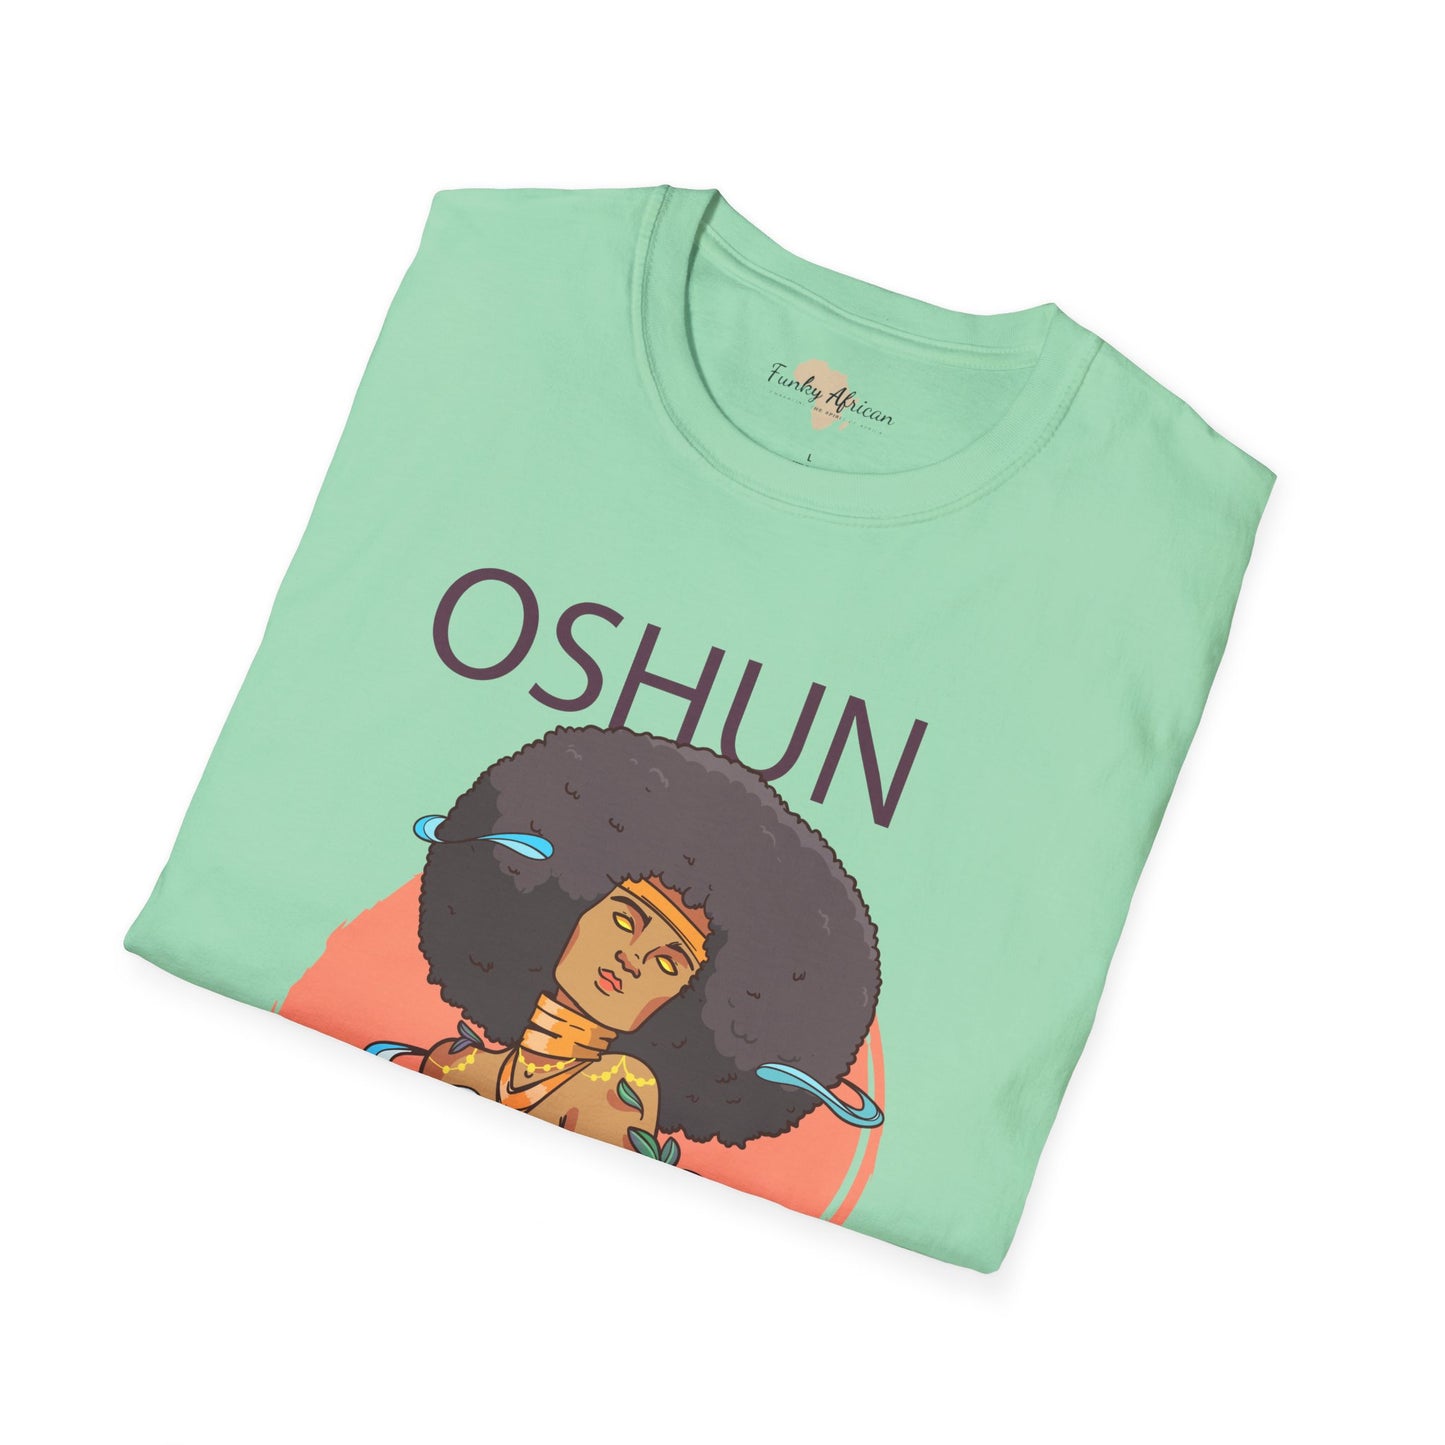 Oshun unisex softstyle tee